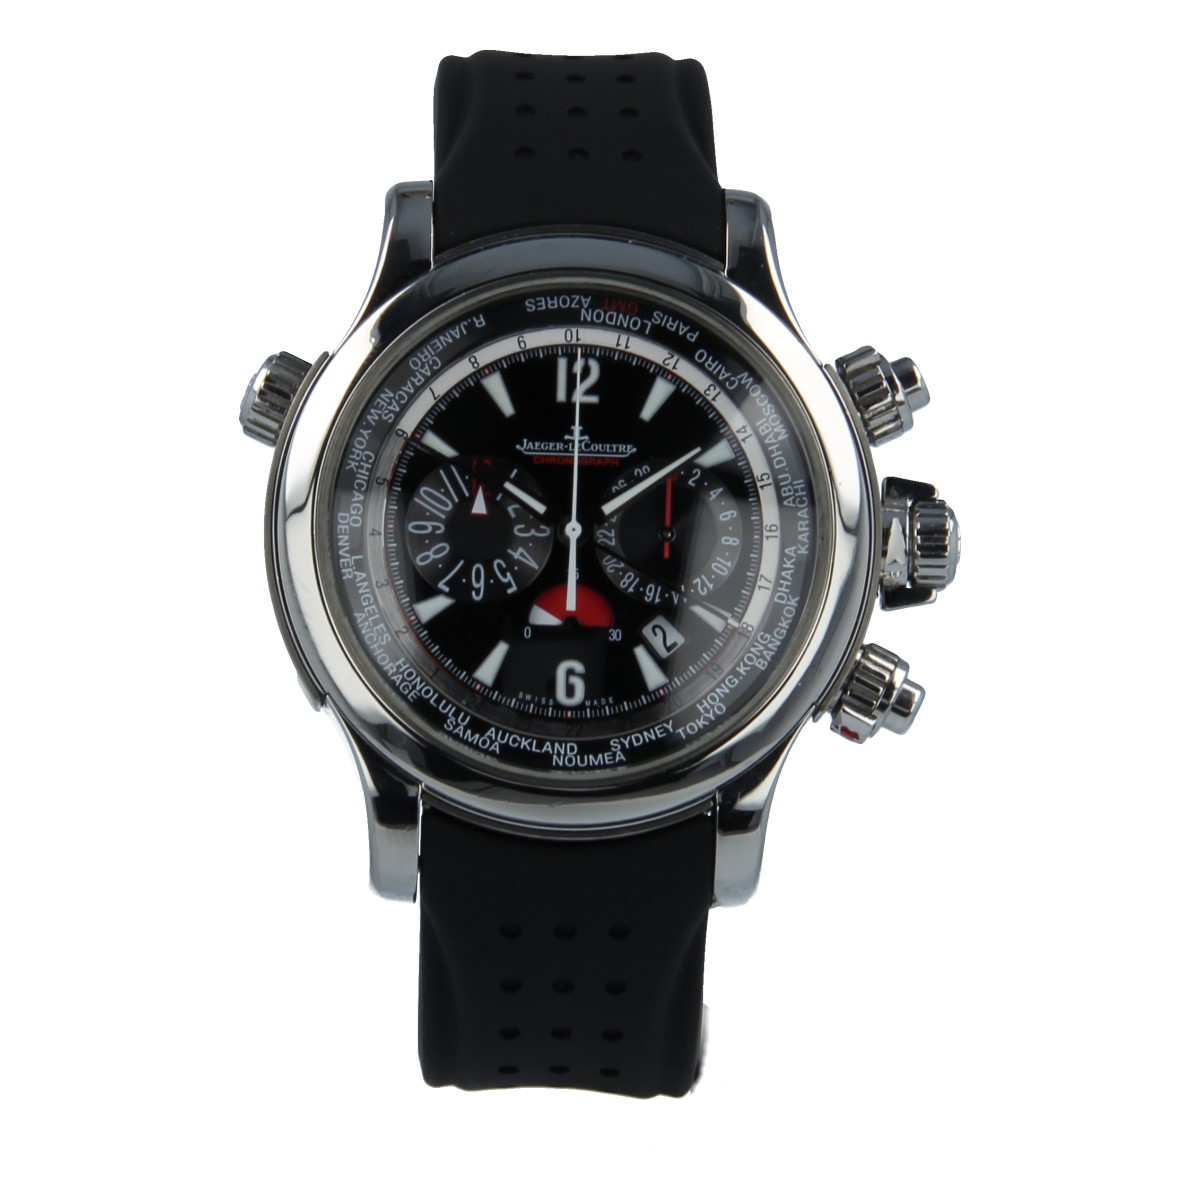 Jaeger-LeCoultre Master Compressor Extreme World Chronograph | Comprar reloj Jaeger-LeCoultre de segunda mano